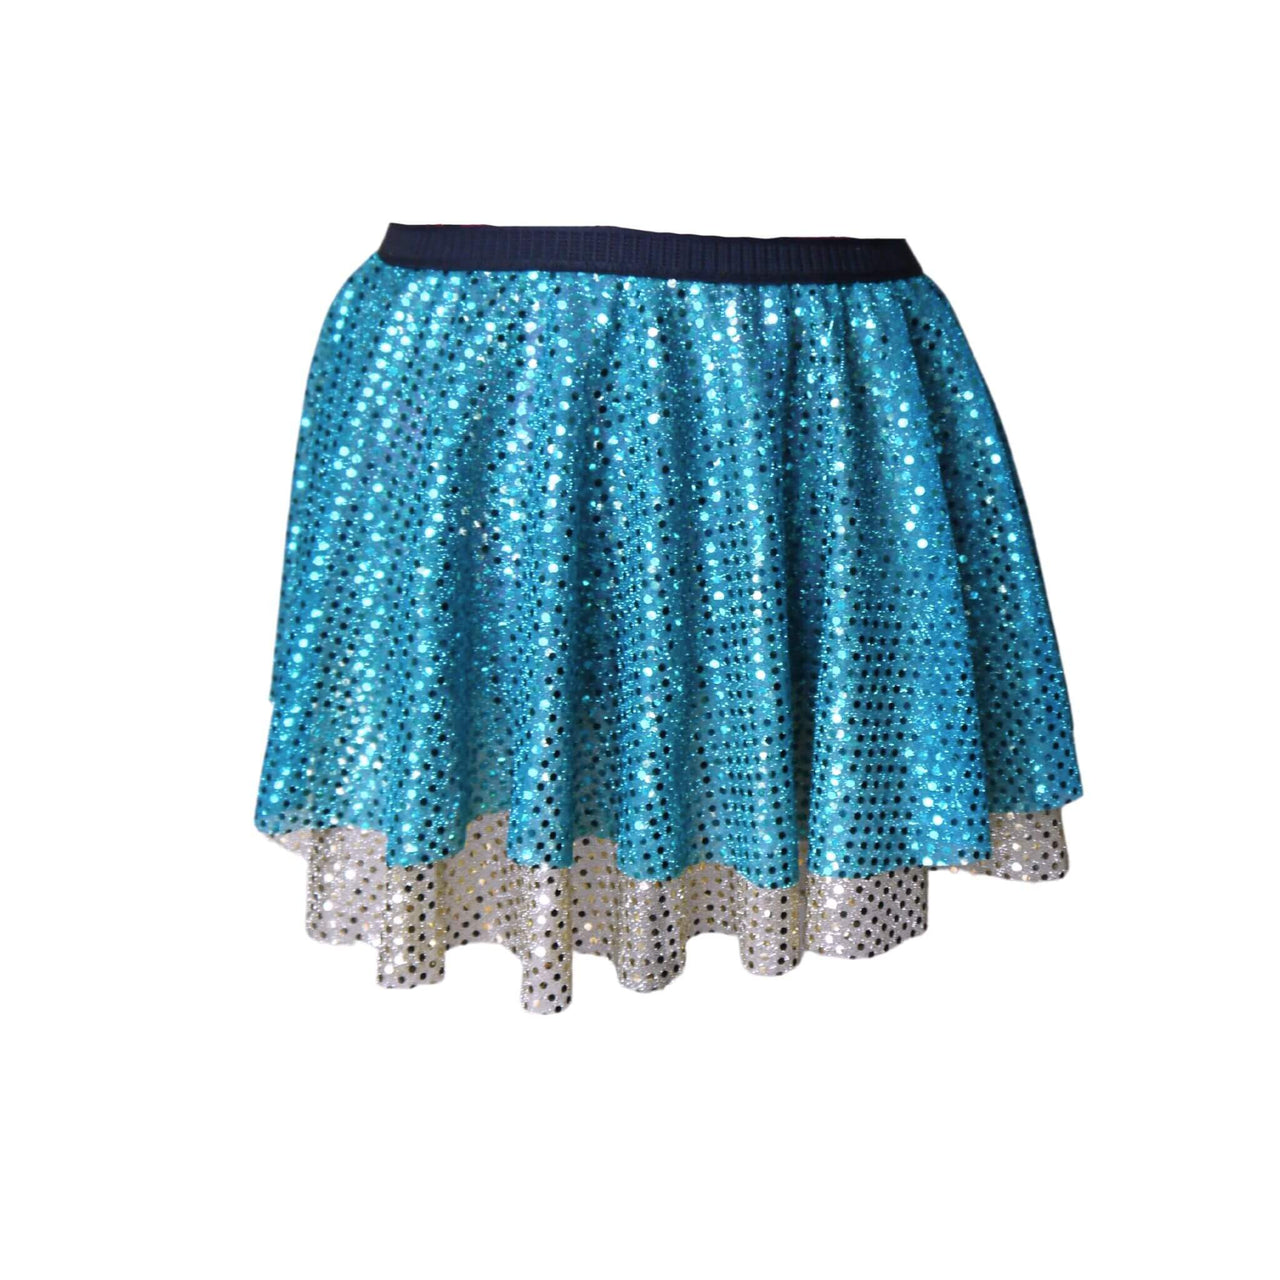 Brave Princess Sparkle Skirt